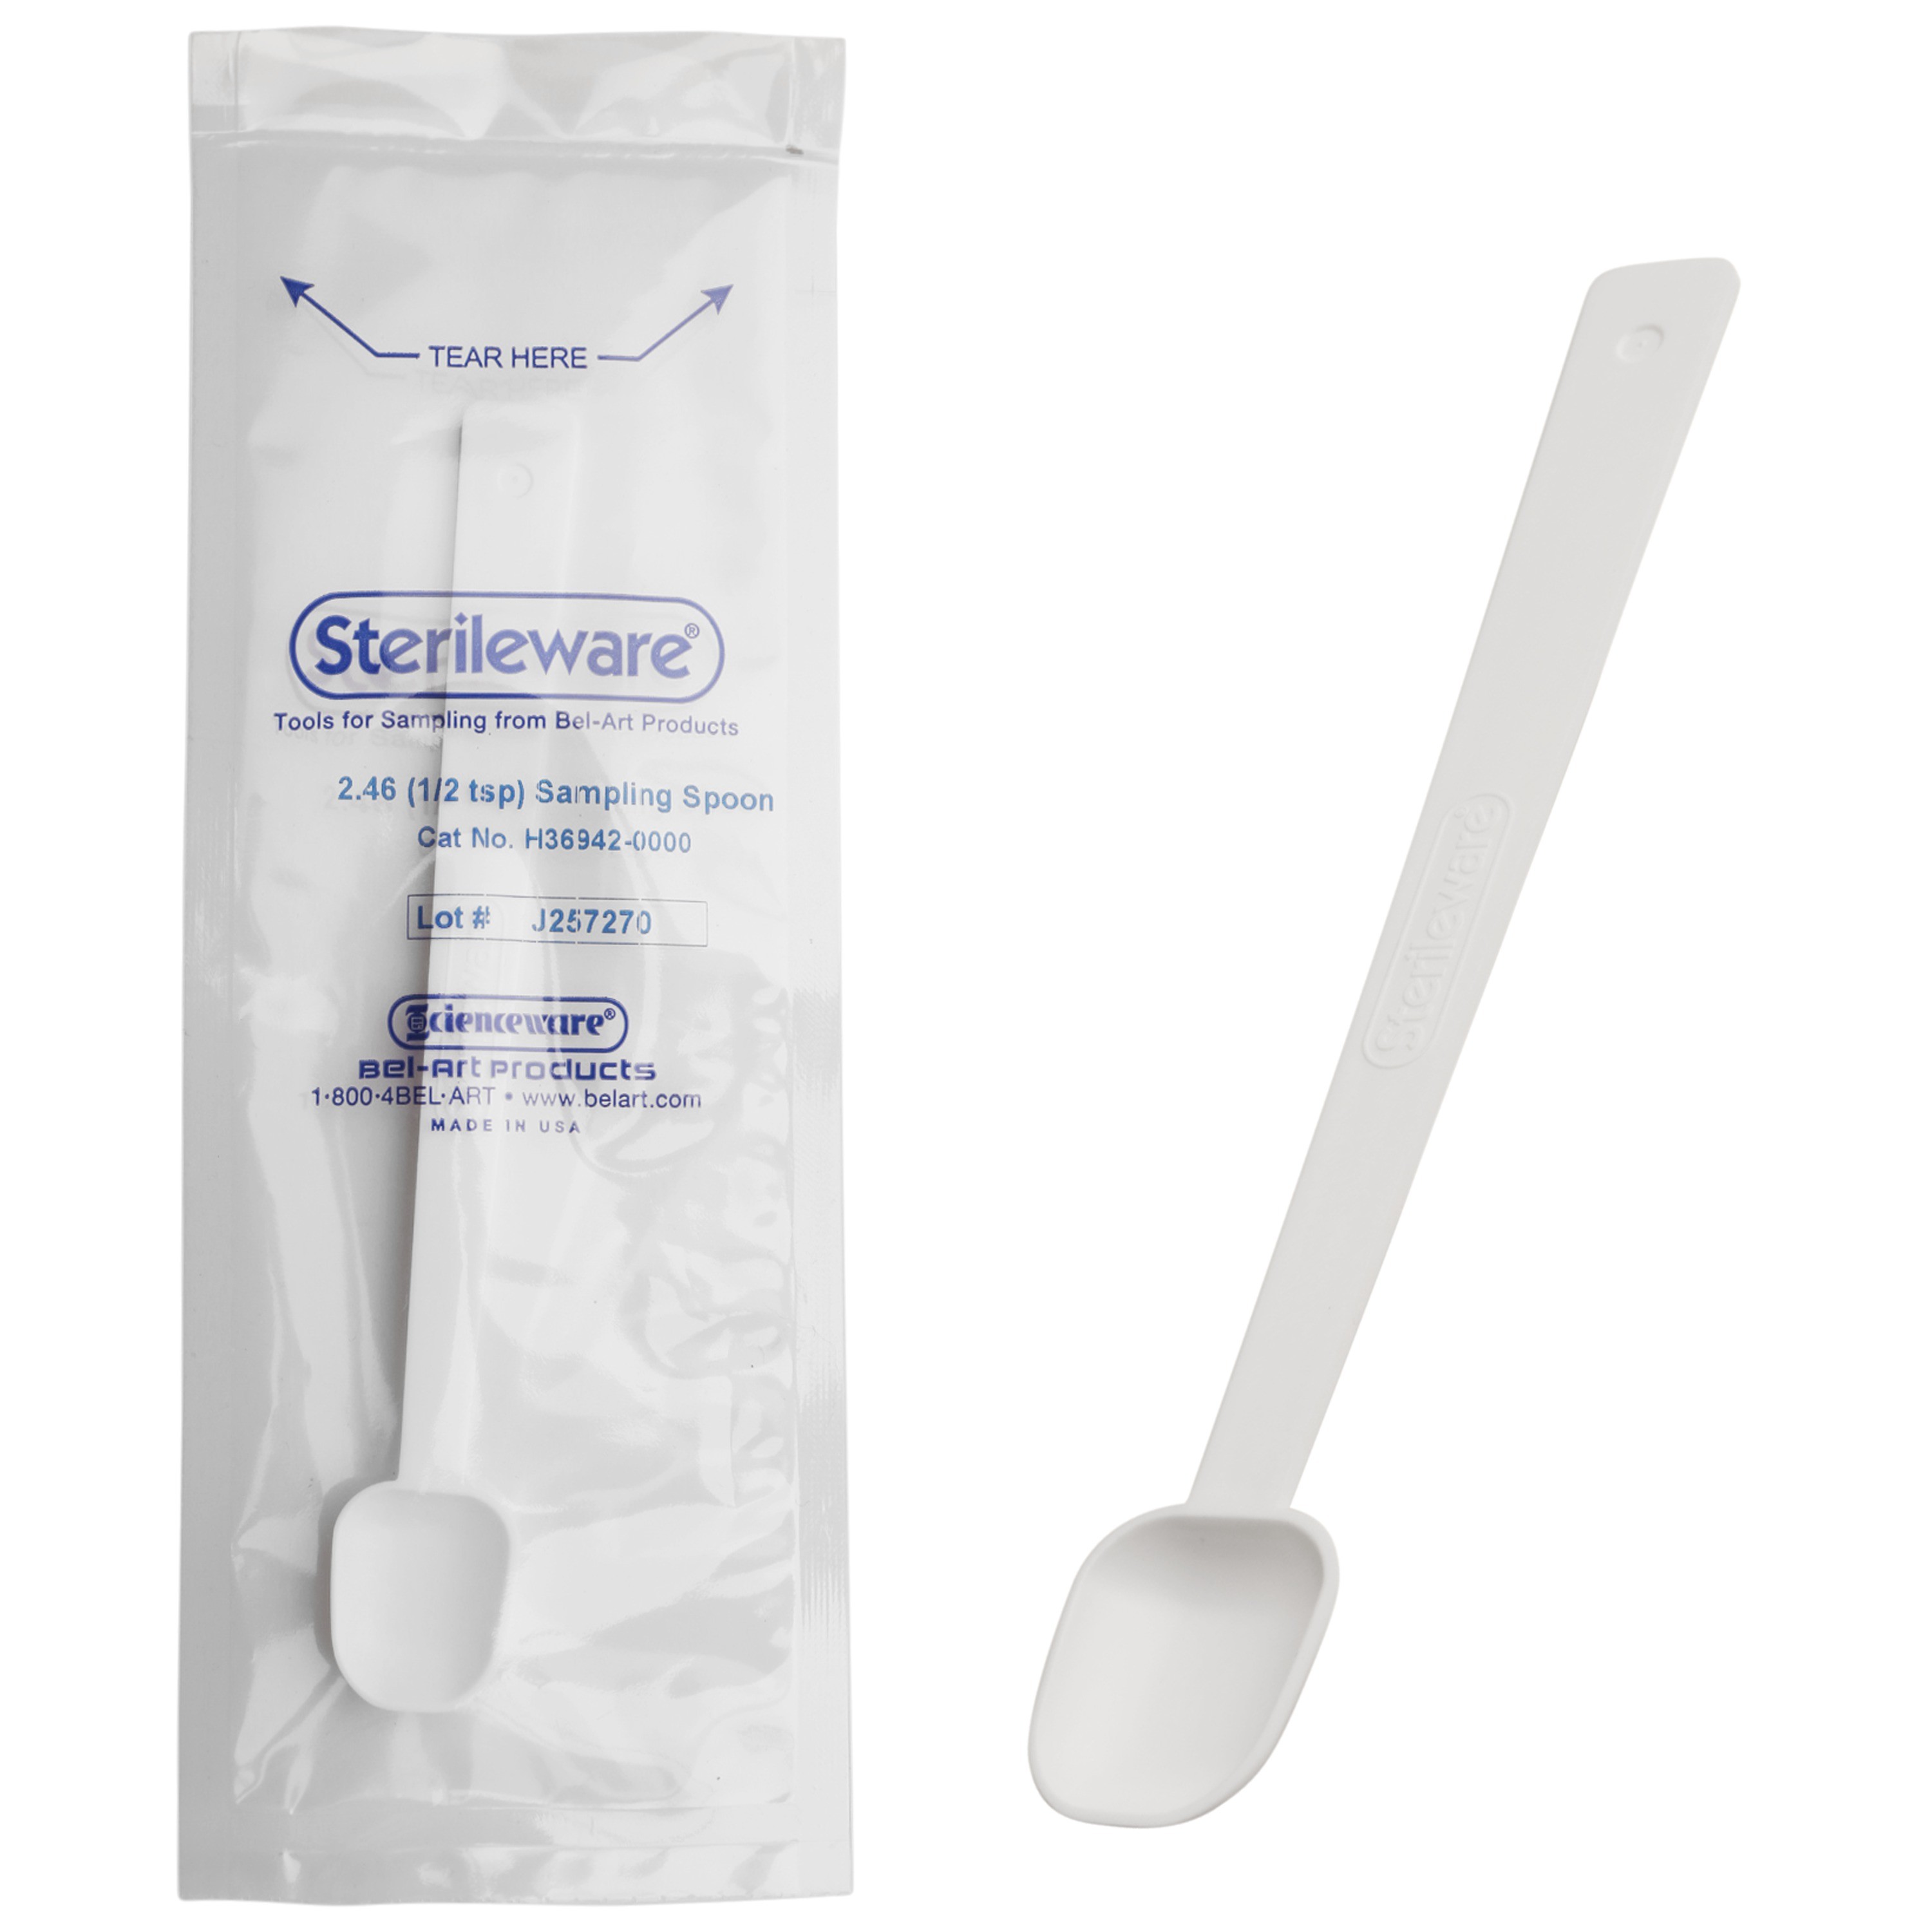 SP Bel-Art Sterileware Long Handle Sterile Sampling Spoon; 2.46ml (½tsp), Plastic, Individually Wrapped (Pack of 200)